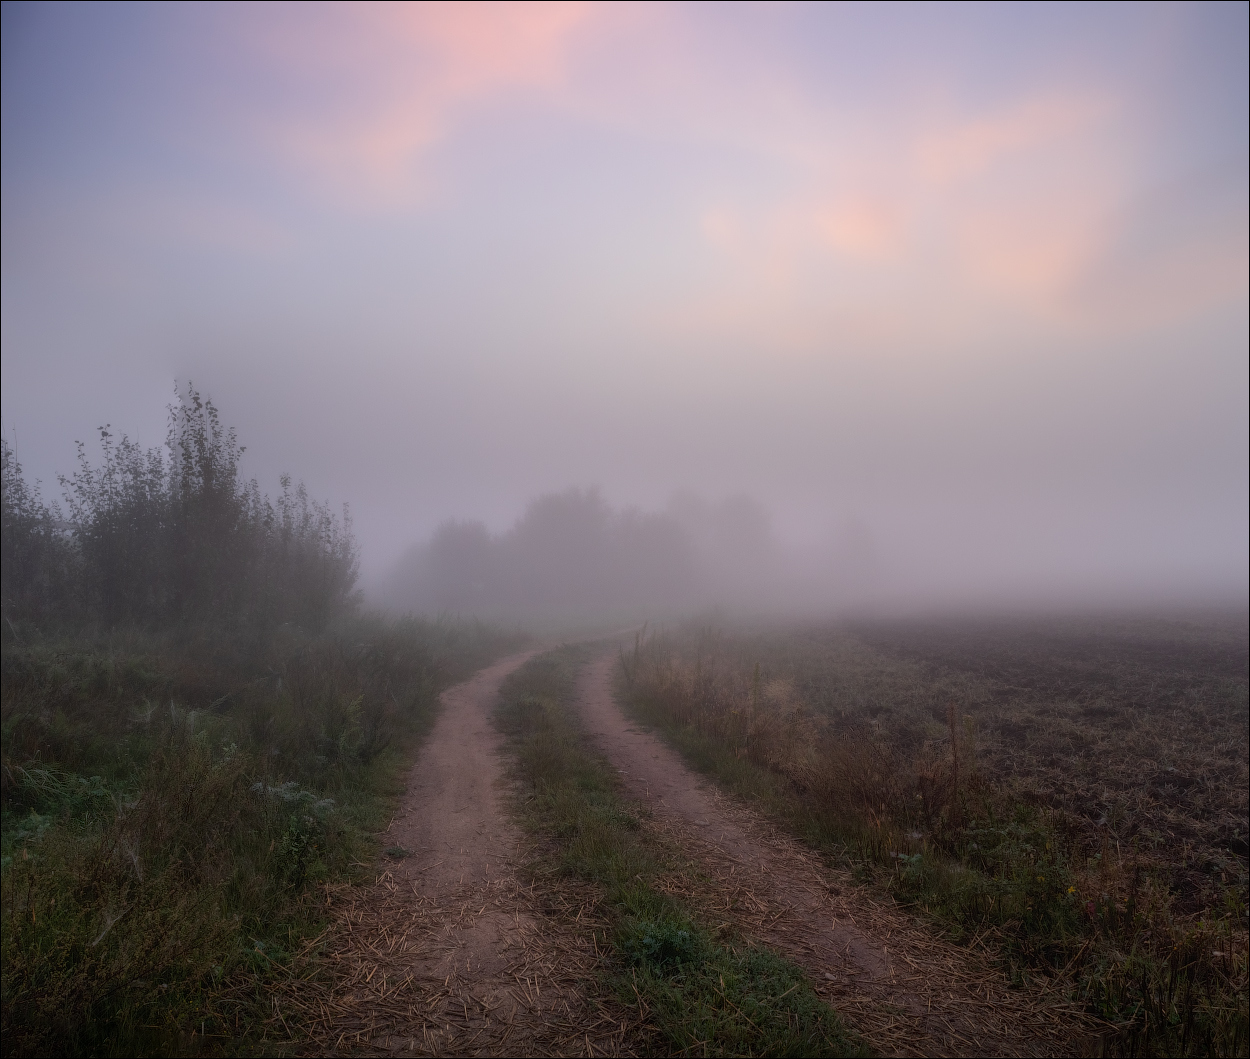 Как то в тумане | Фотограф Сергей Шабуневич | foto.by фото.бай